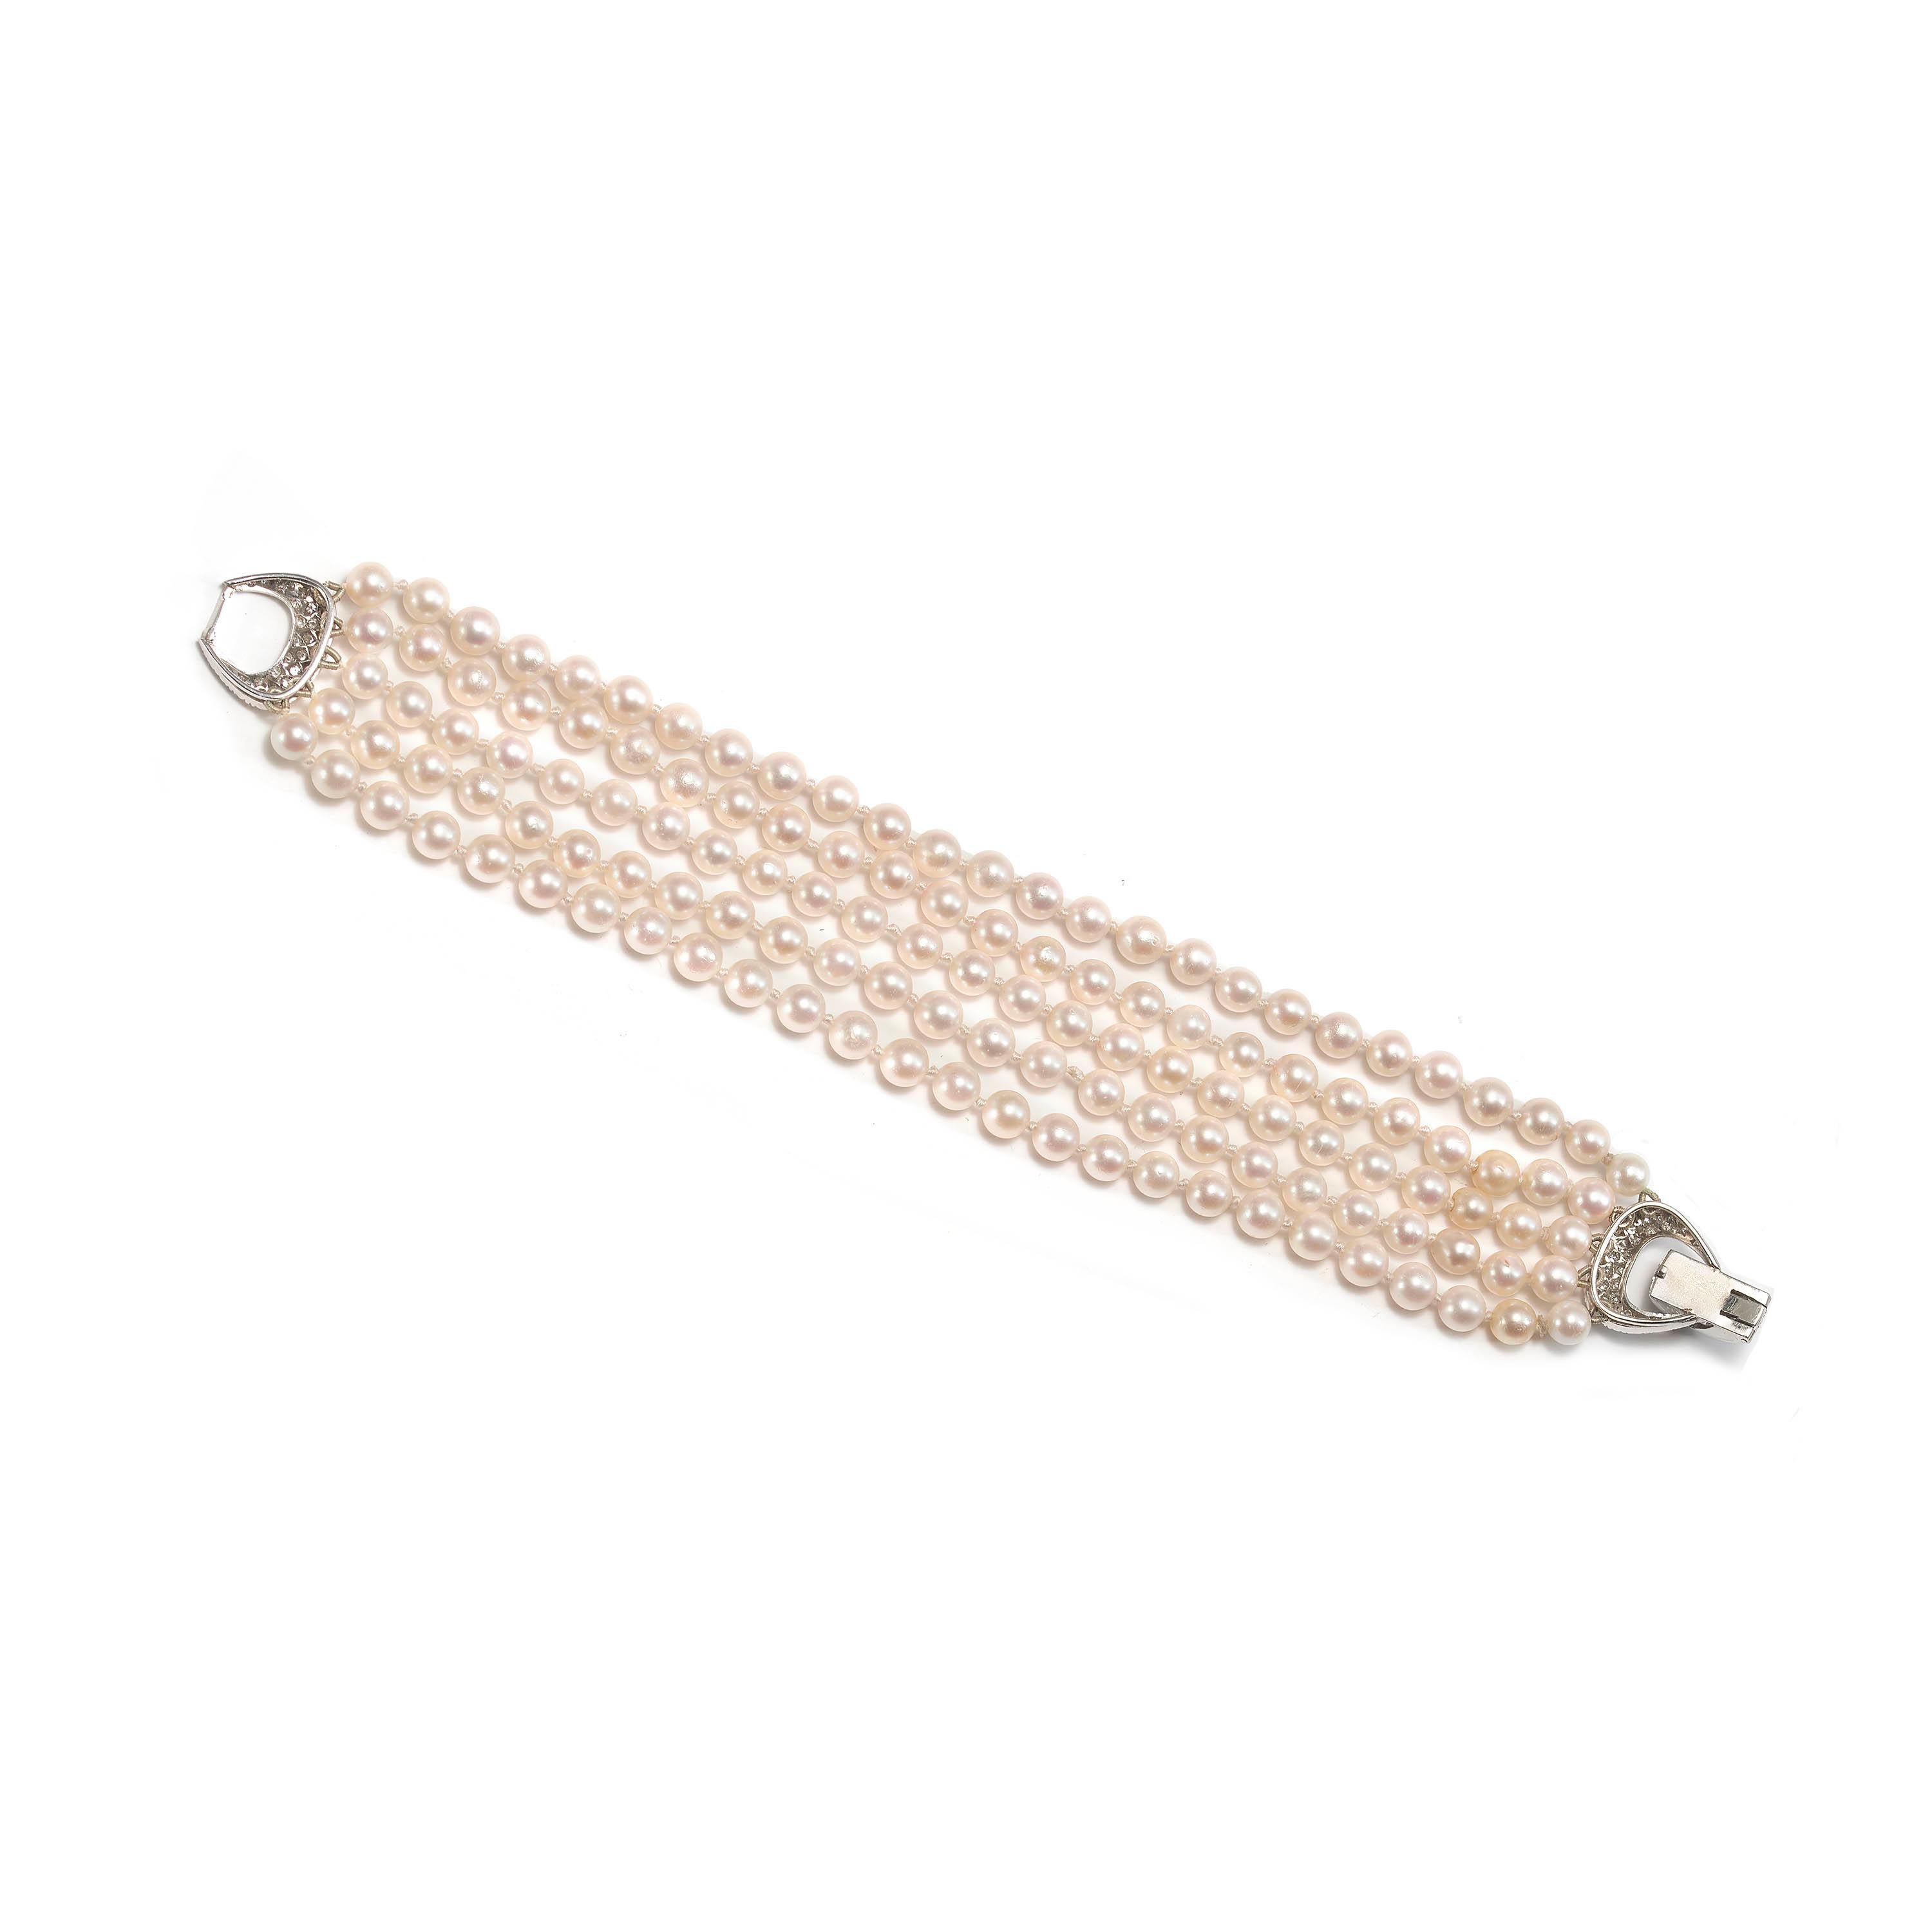 Brilliant Cut Five Row Cultured Pearl and Diamond Bracelet, 2.00 Carats